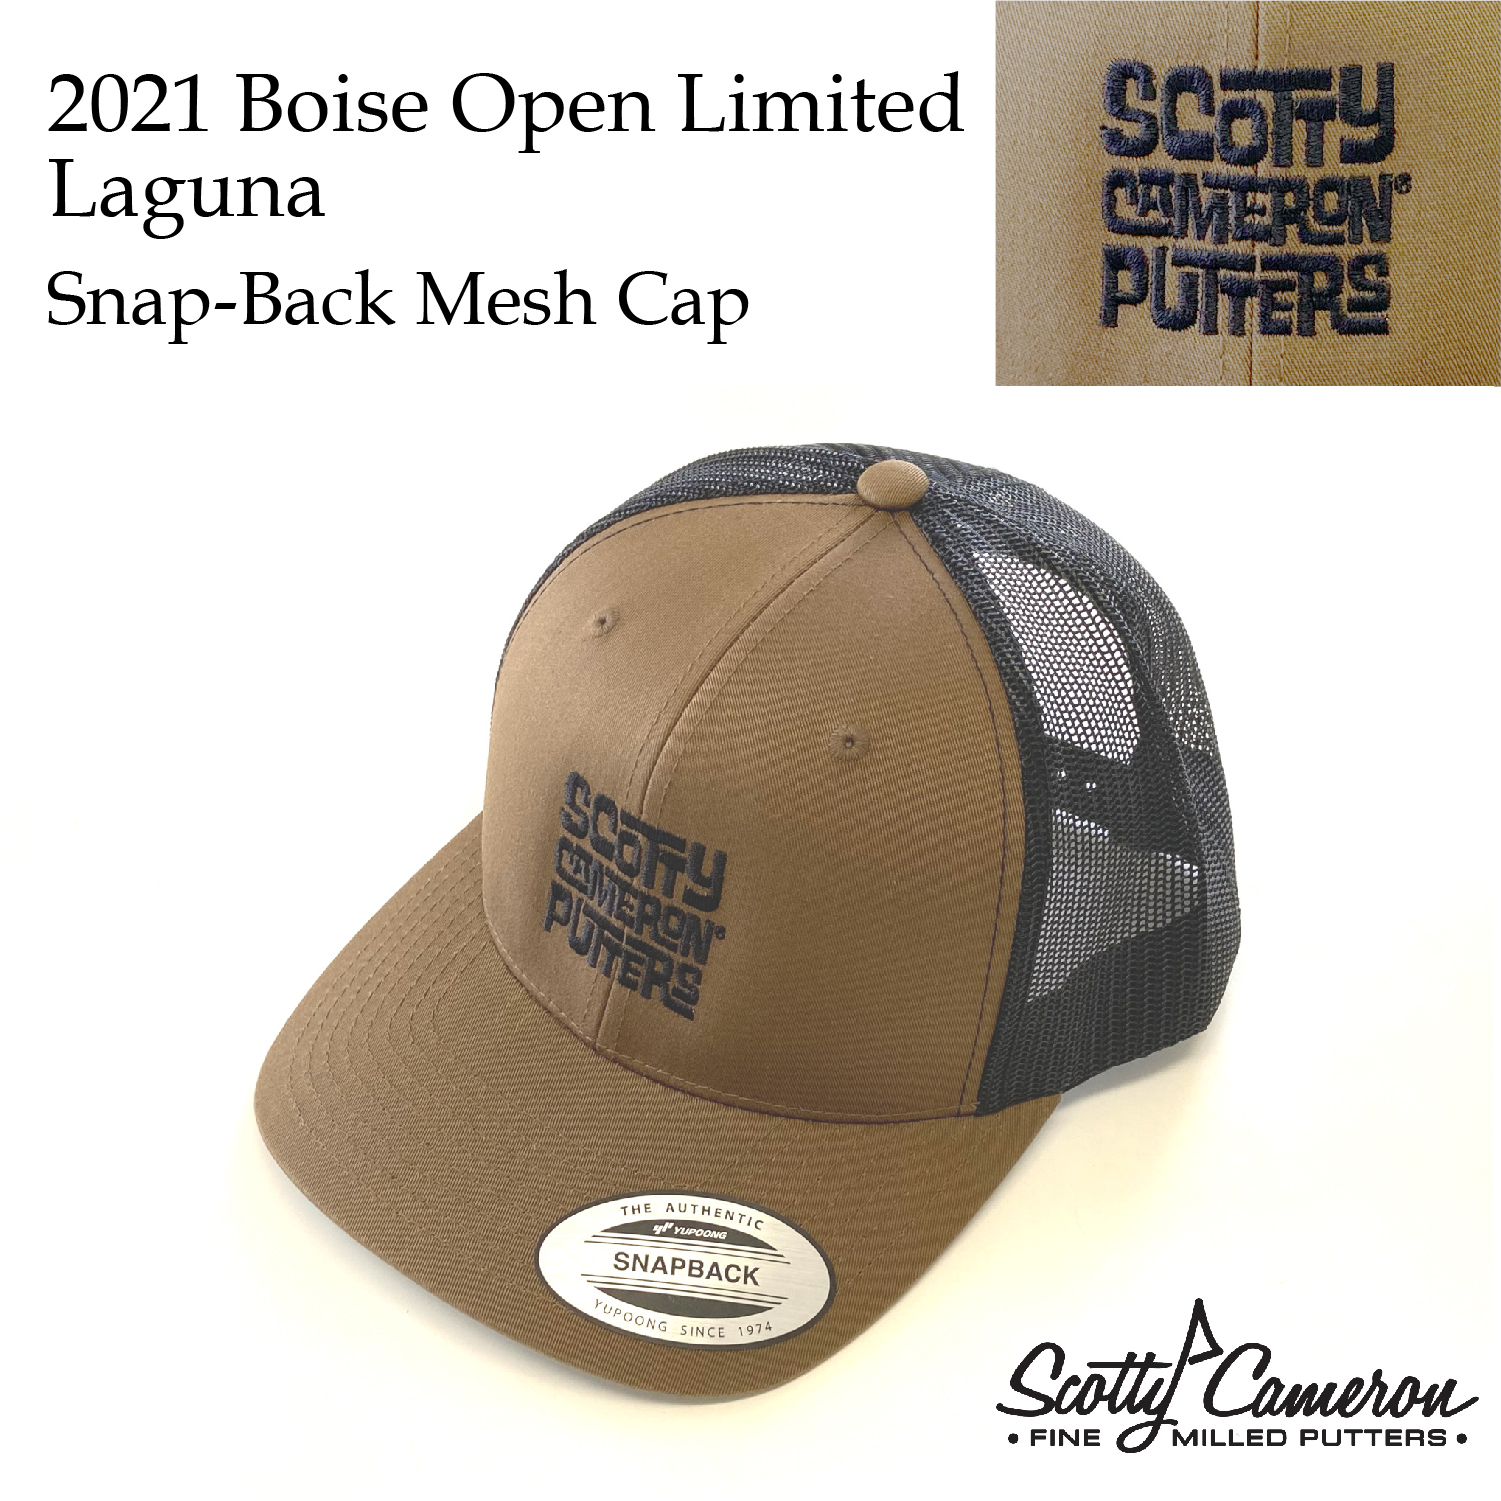 Scotty Cameron 2021 Boise Open Limited SC Laguna Snap-Back Mesh Cap